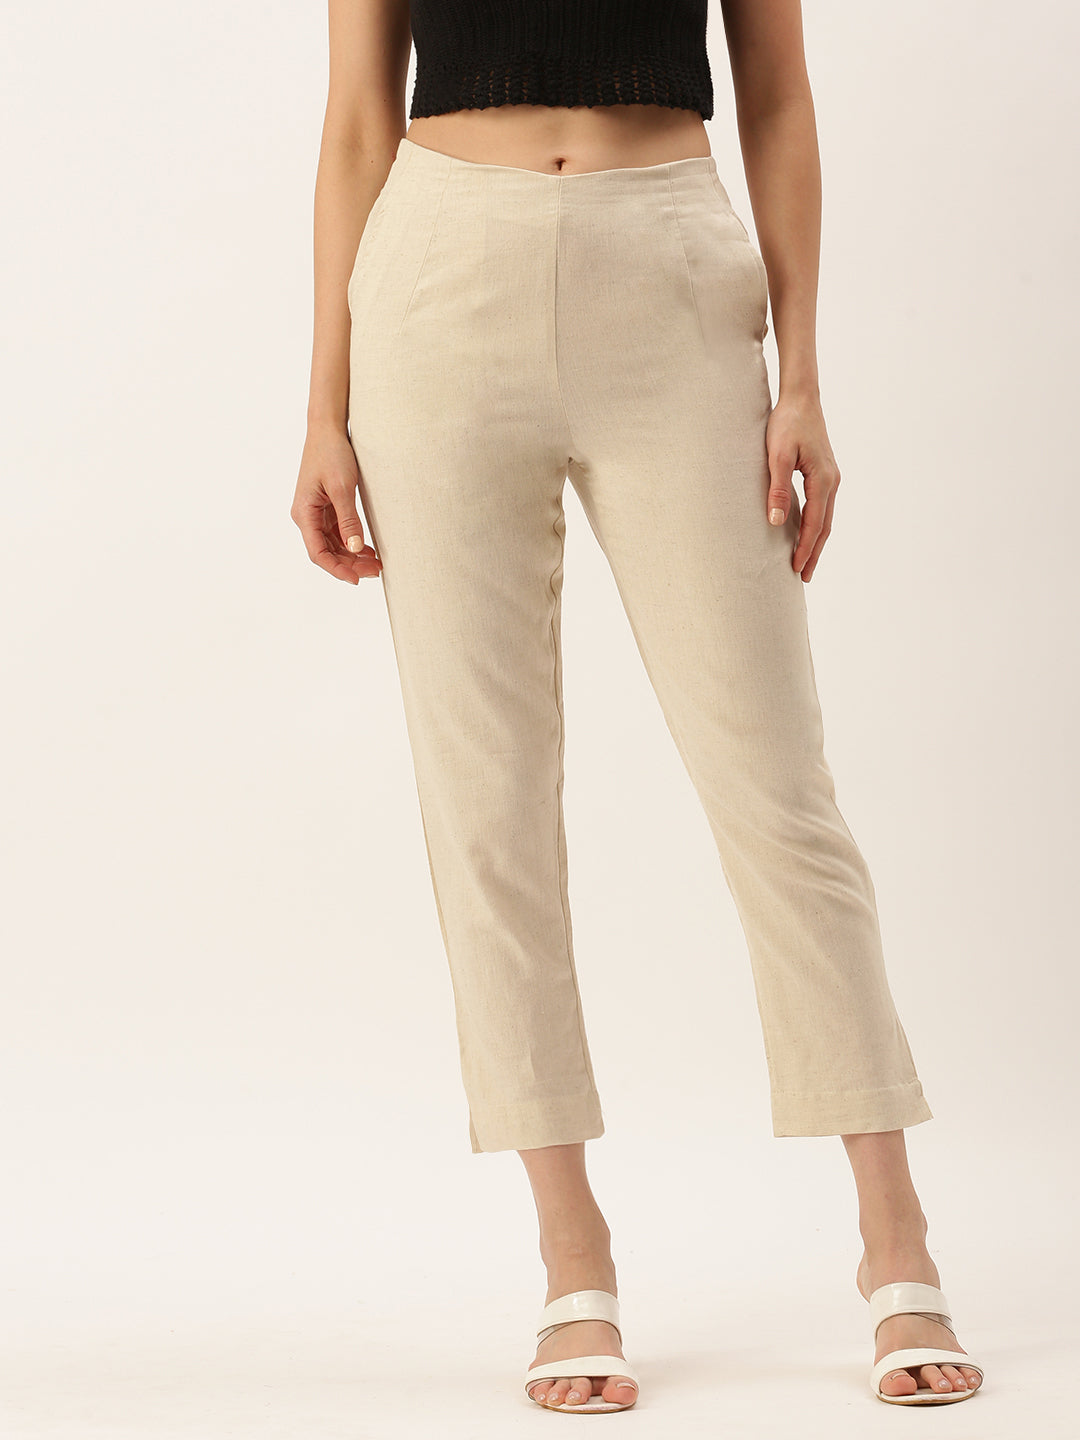 Women's Pants | Hollister Co.